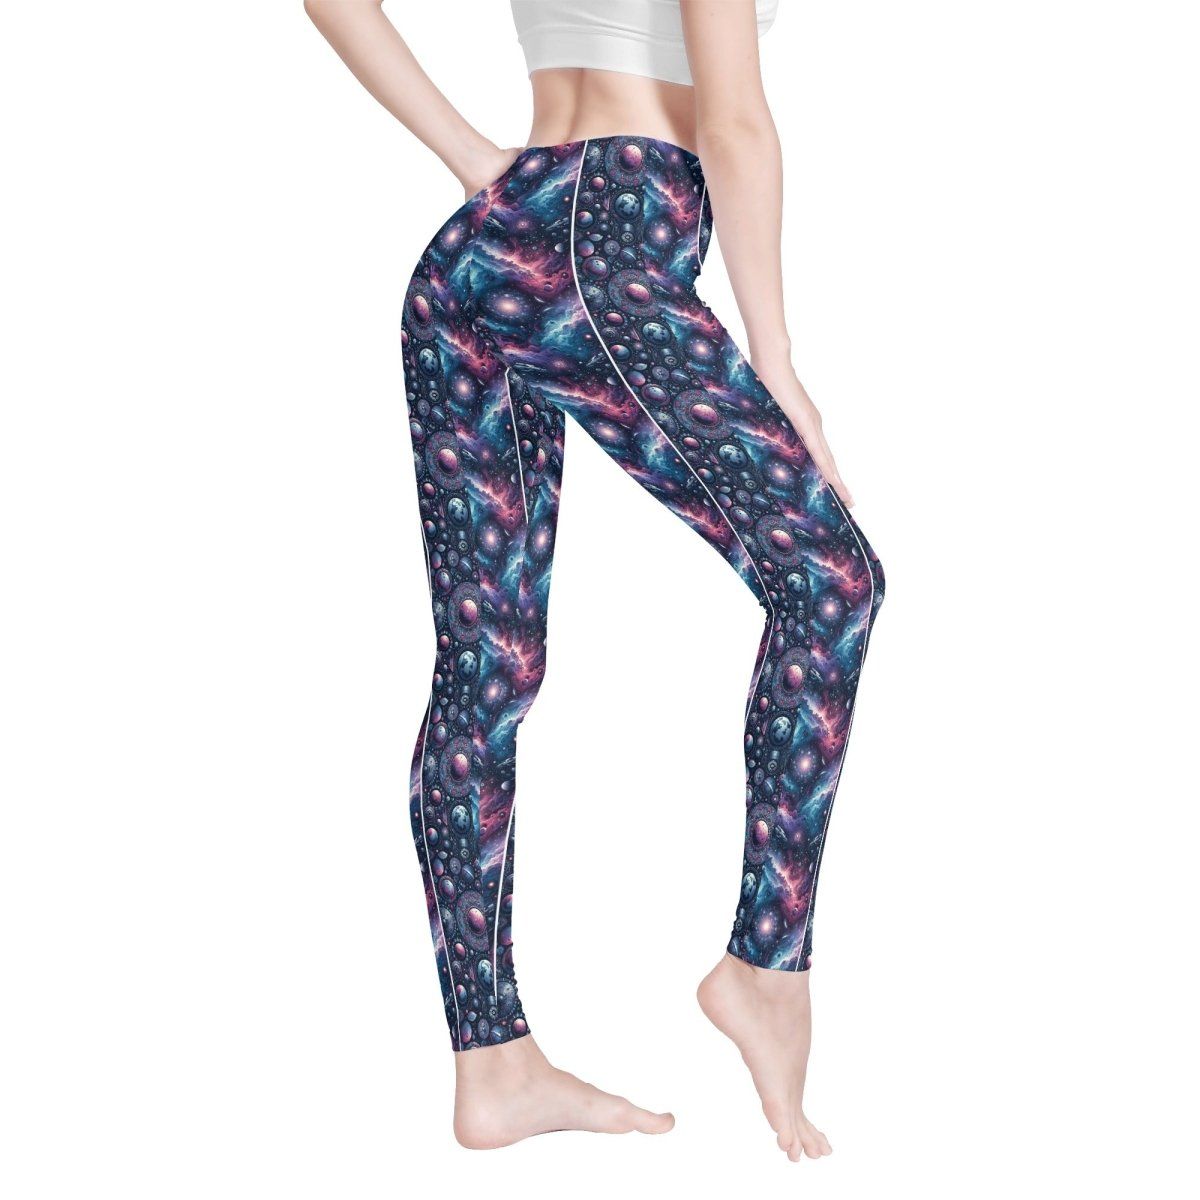 Sleek Yoga Leggings for Women - Comfortable and Stylish Planets Print Pants - Iron Phoenix GHG